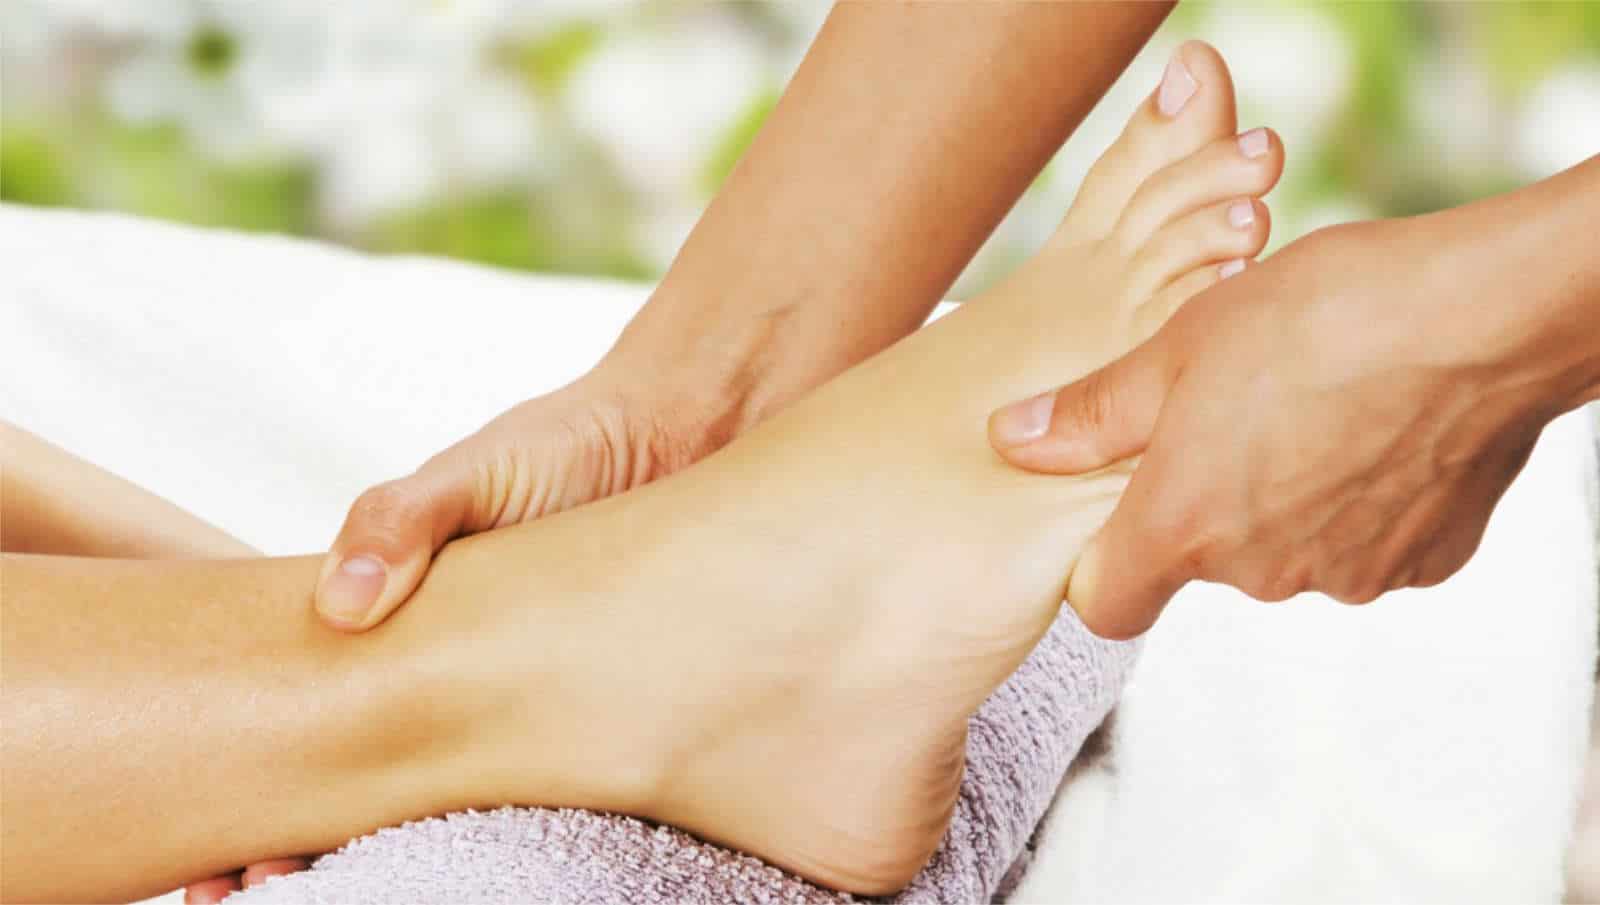 Foot being massaged